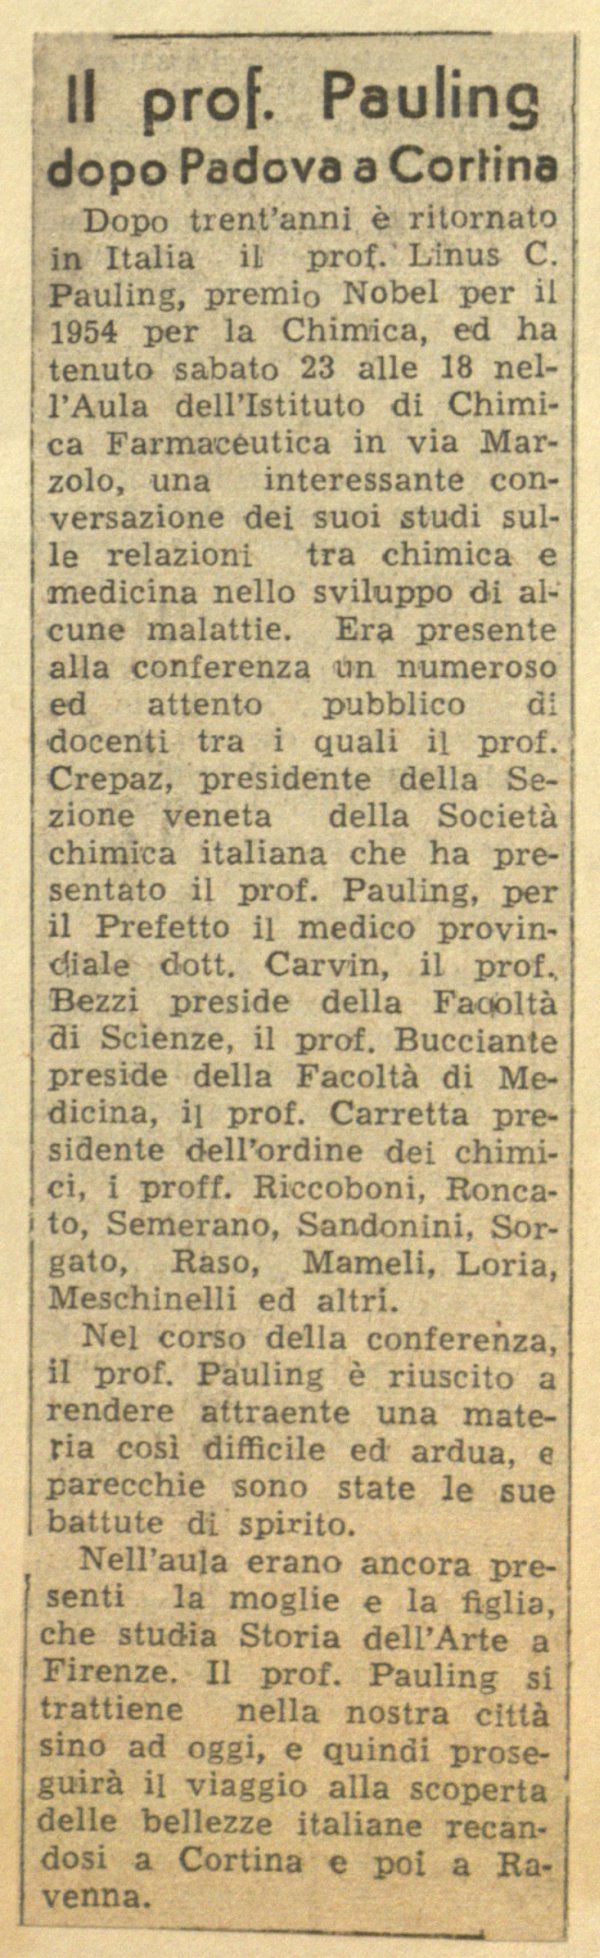 "Il prof. Pauling dopo Padova a Cortina." Page 1. June 25, 1956